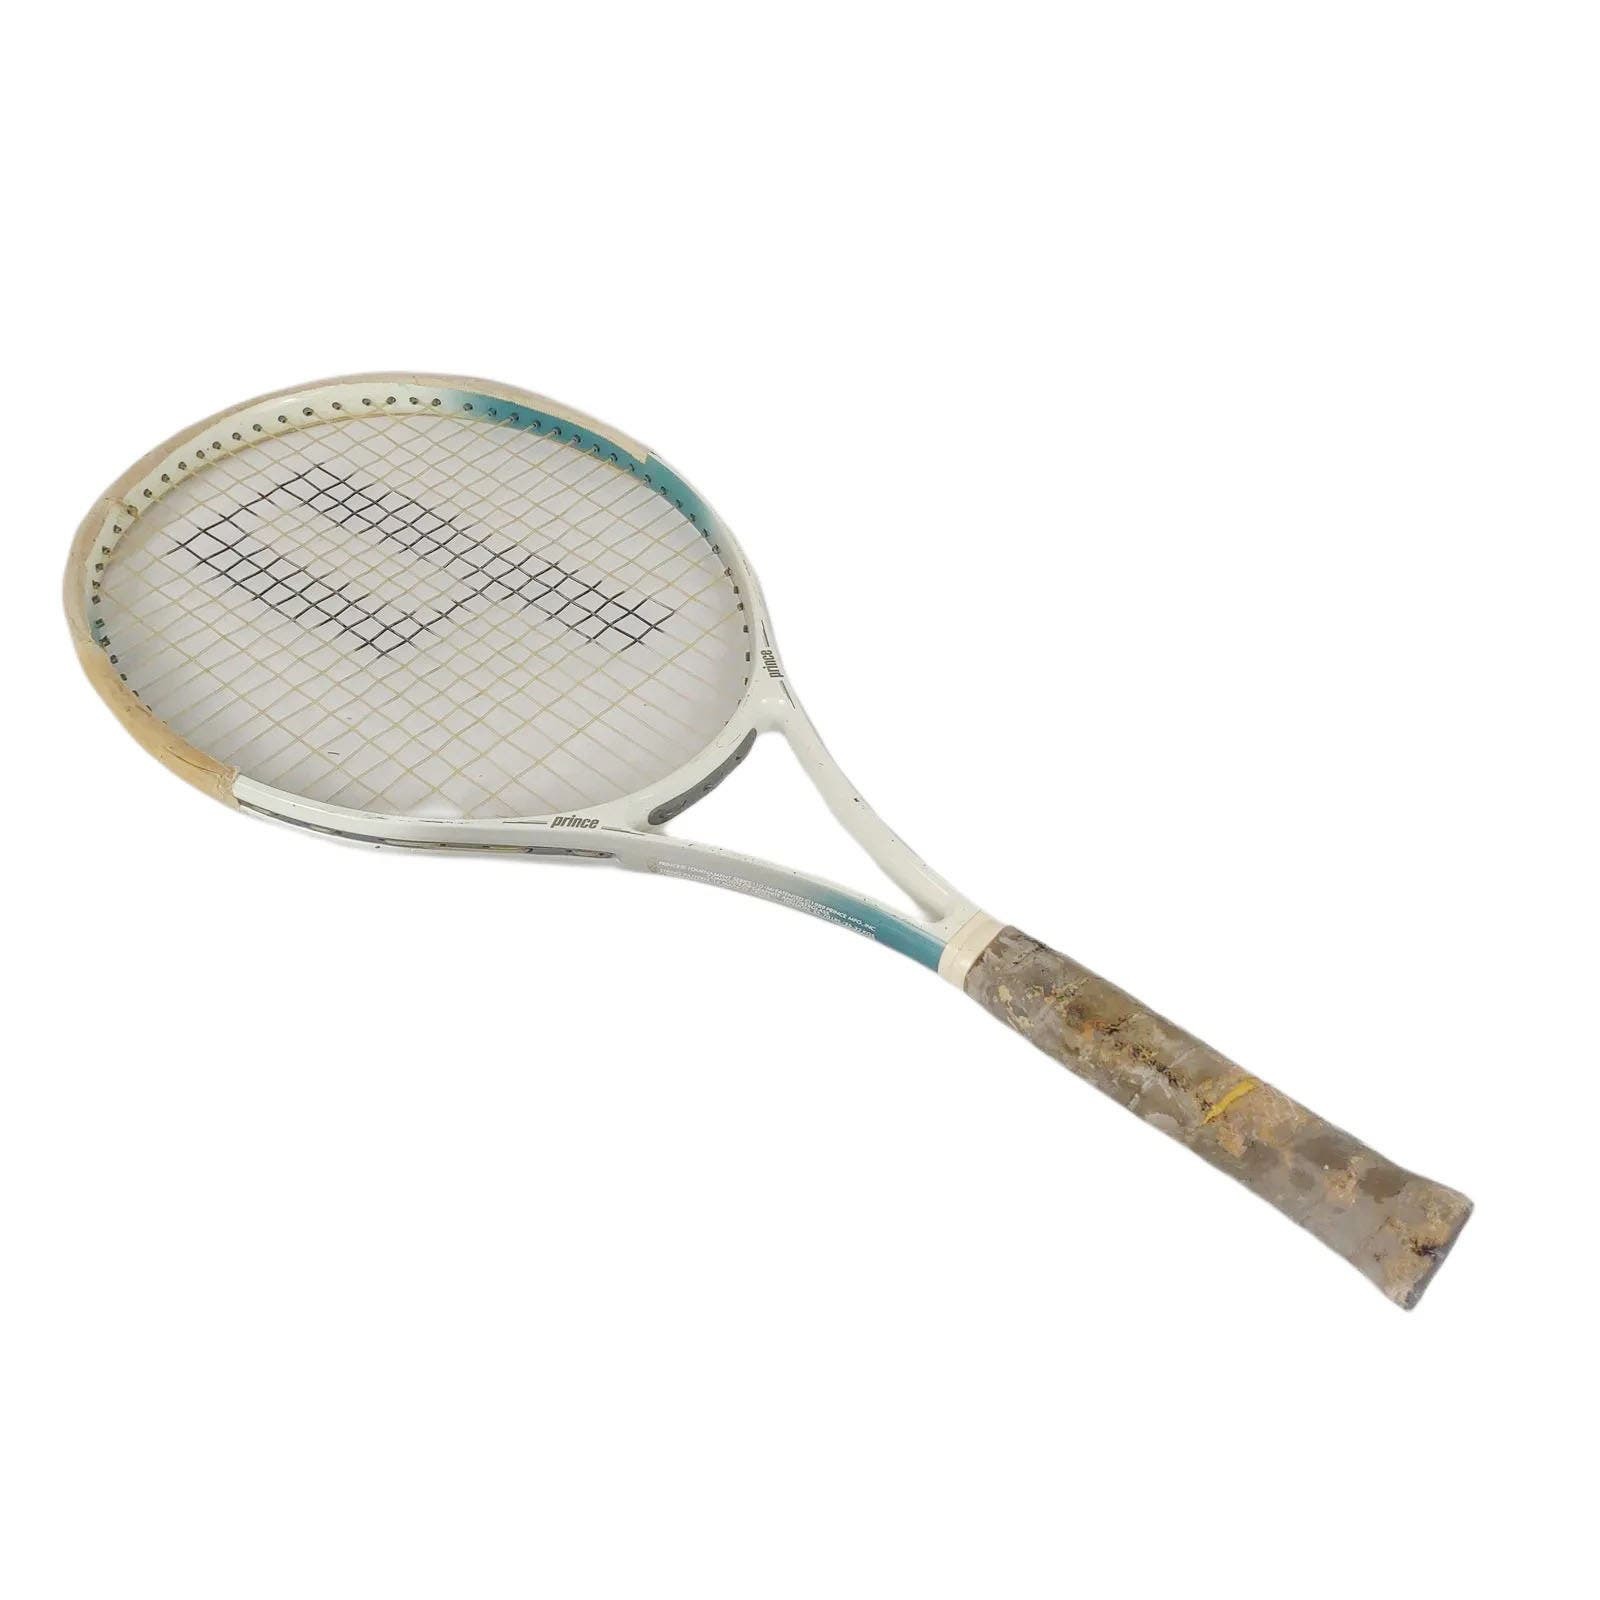 Vintage 1989 Prince Tricomp 110 Tennis Racket Graphite Fiberglass 16/19 - $19.35